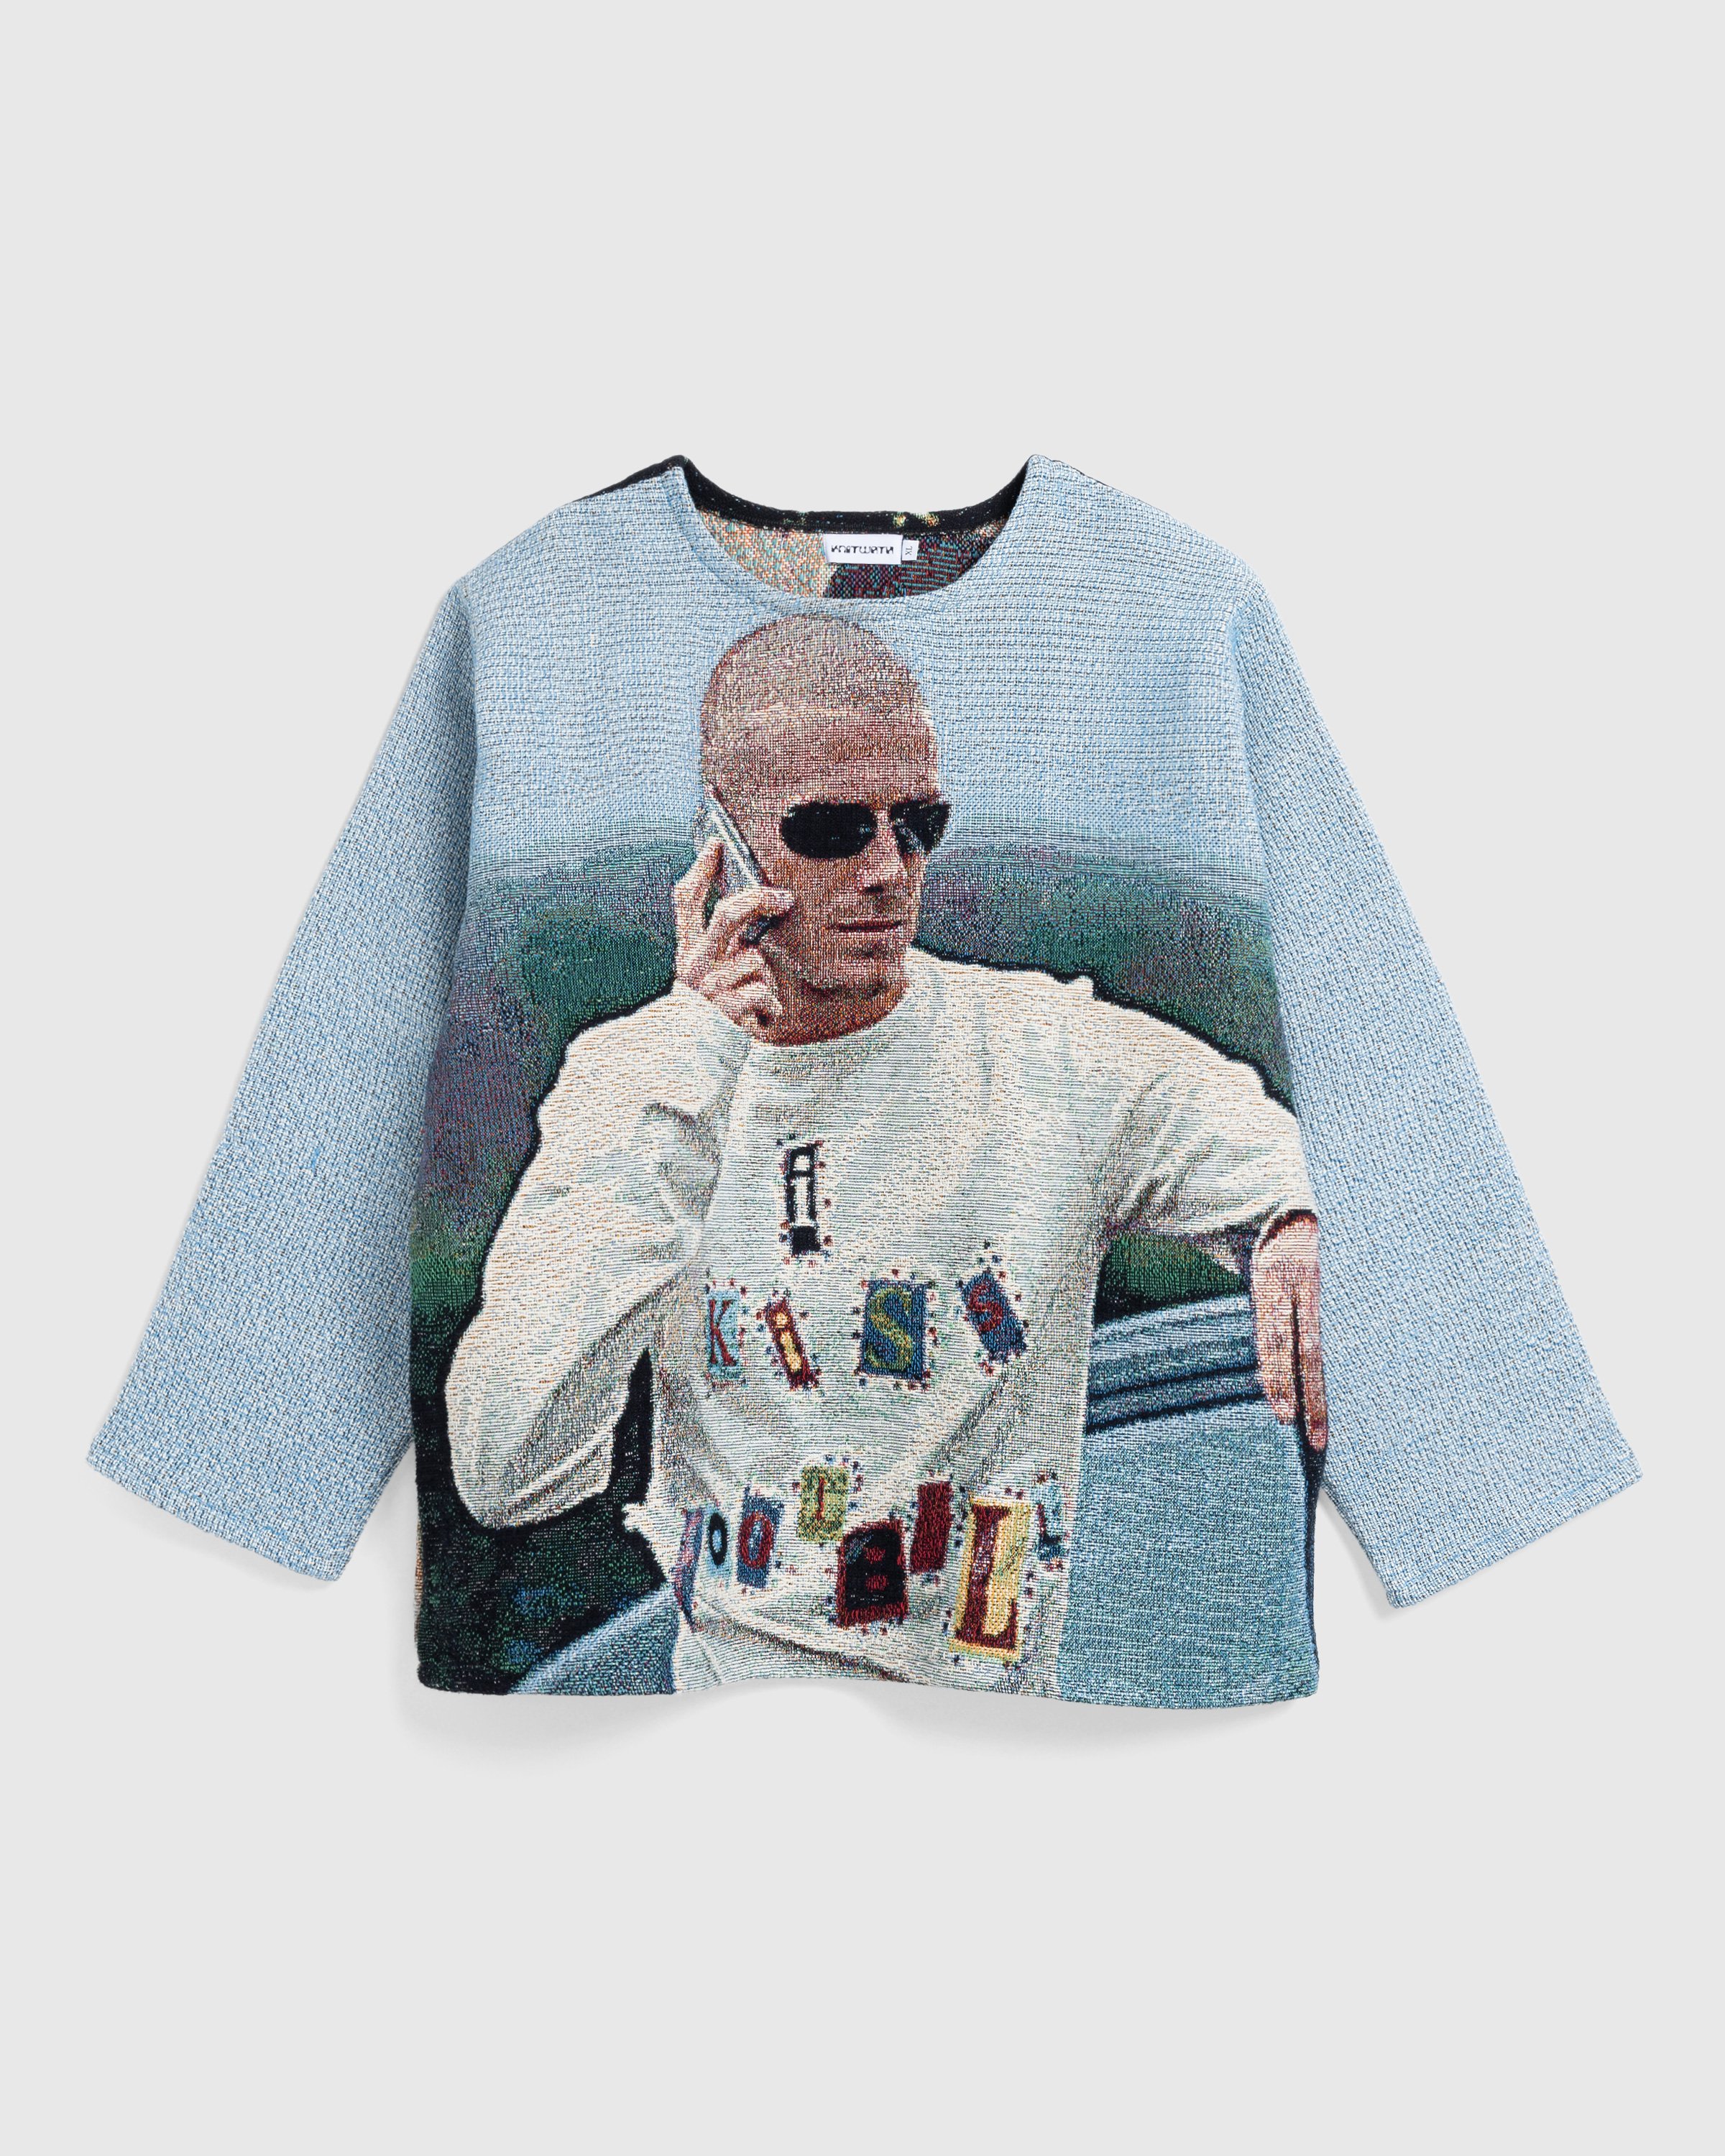 KNITWRTH - David Beckham Knit - Clothing -  - Image 1